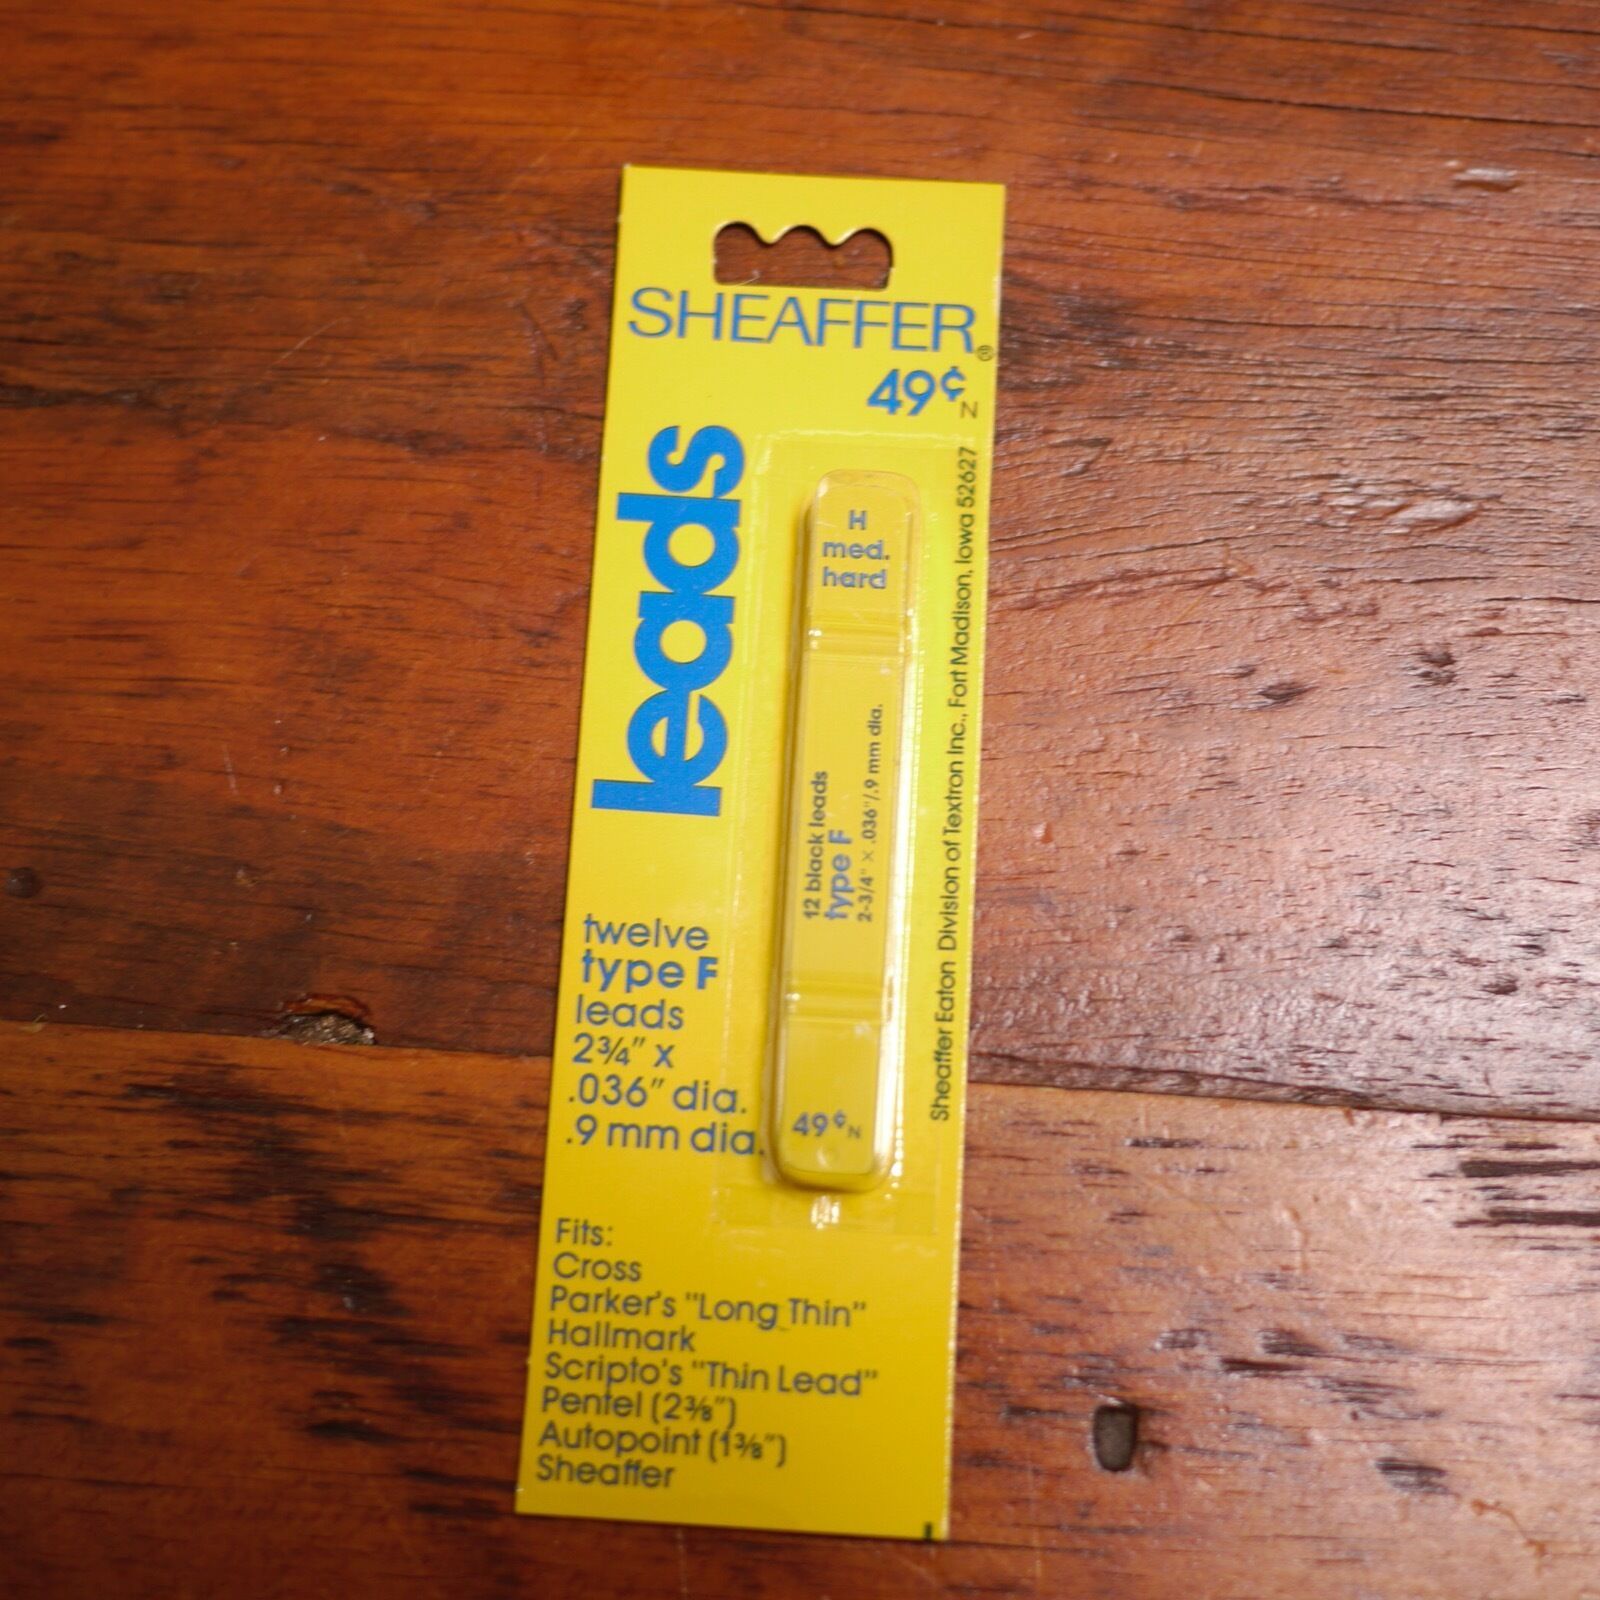 30 Vintage NEW Deadstock SHEAFFER Type F Pencil Leads HB Medium Hard 2.34”x.036” - $36.99